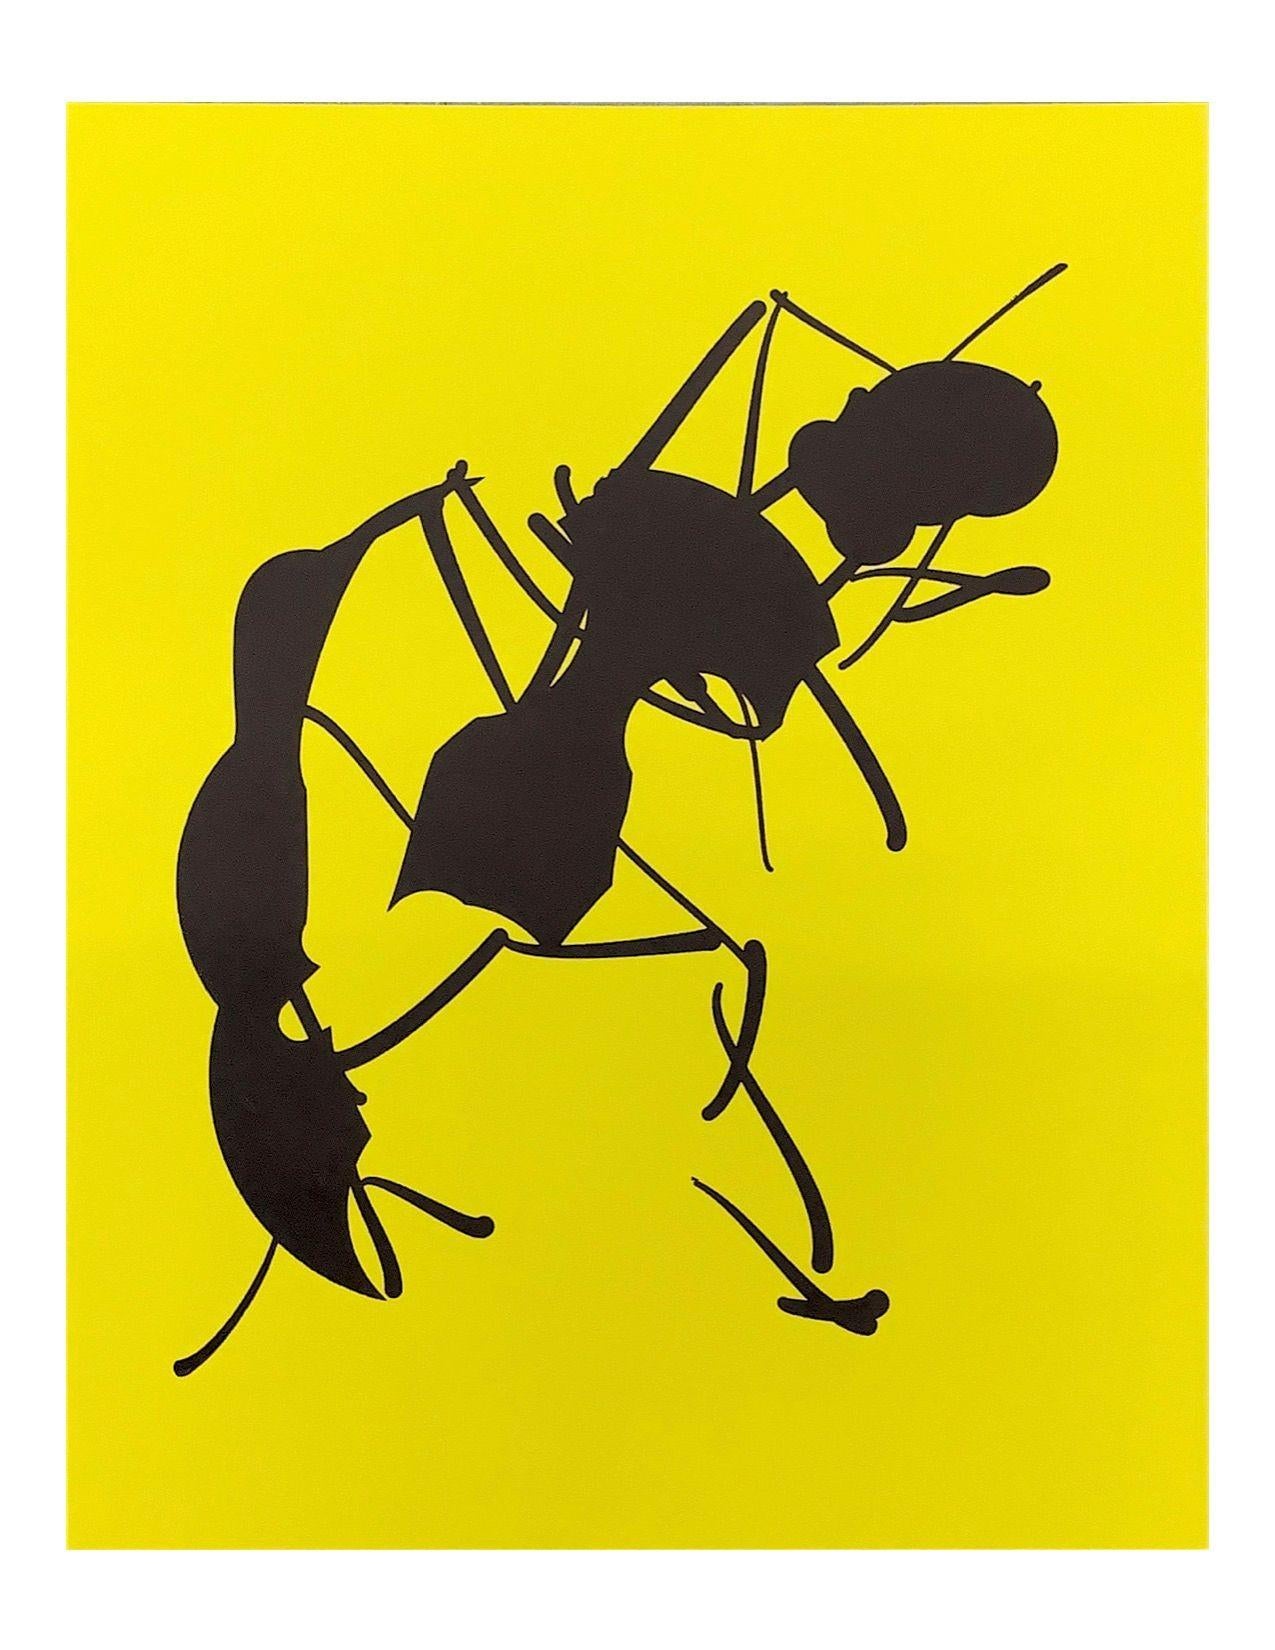 Ant 5 - Print by Tom White 